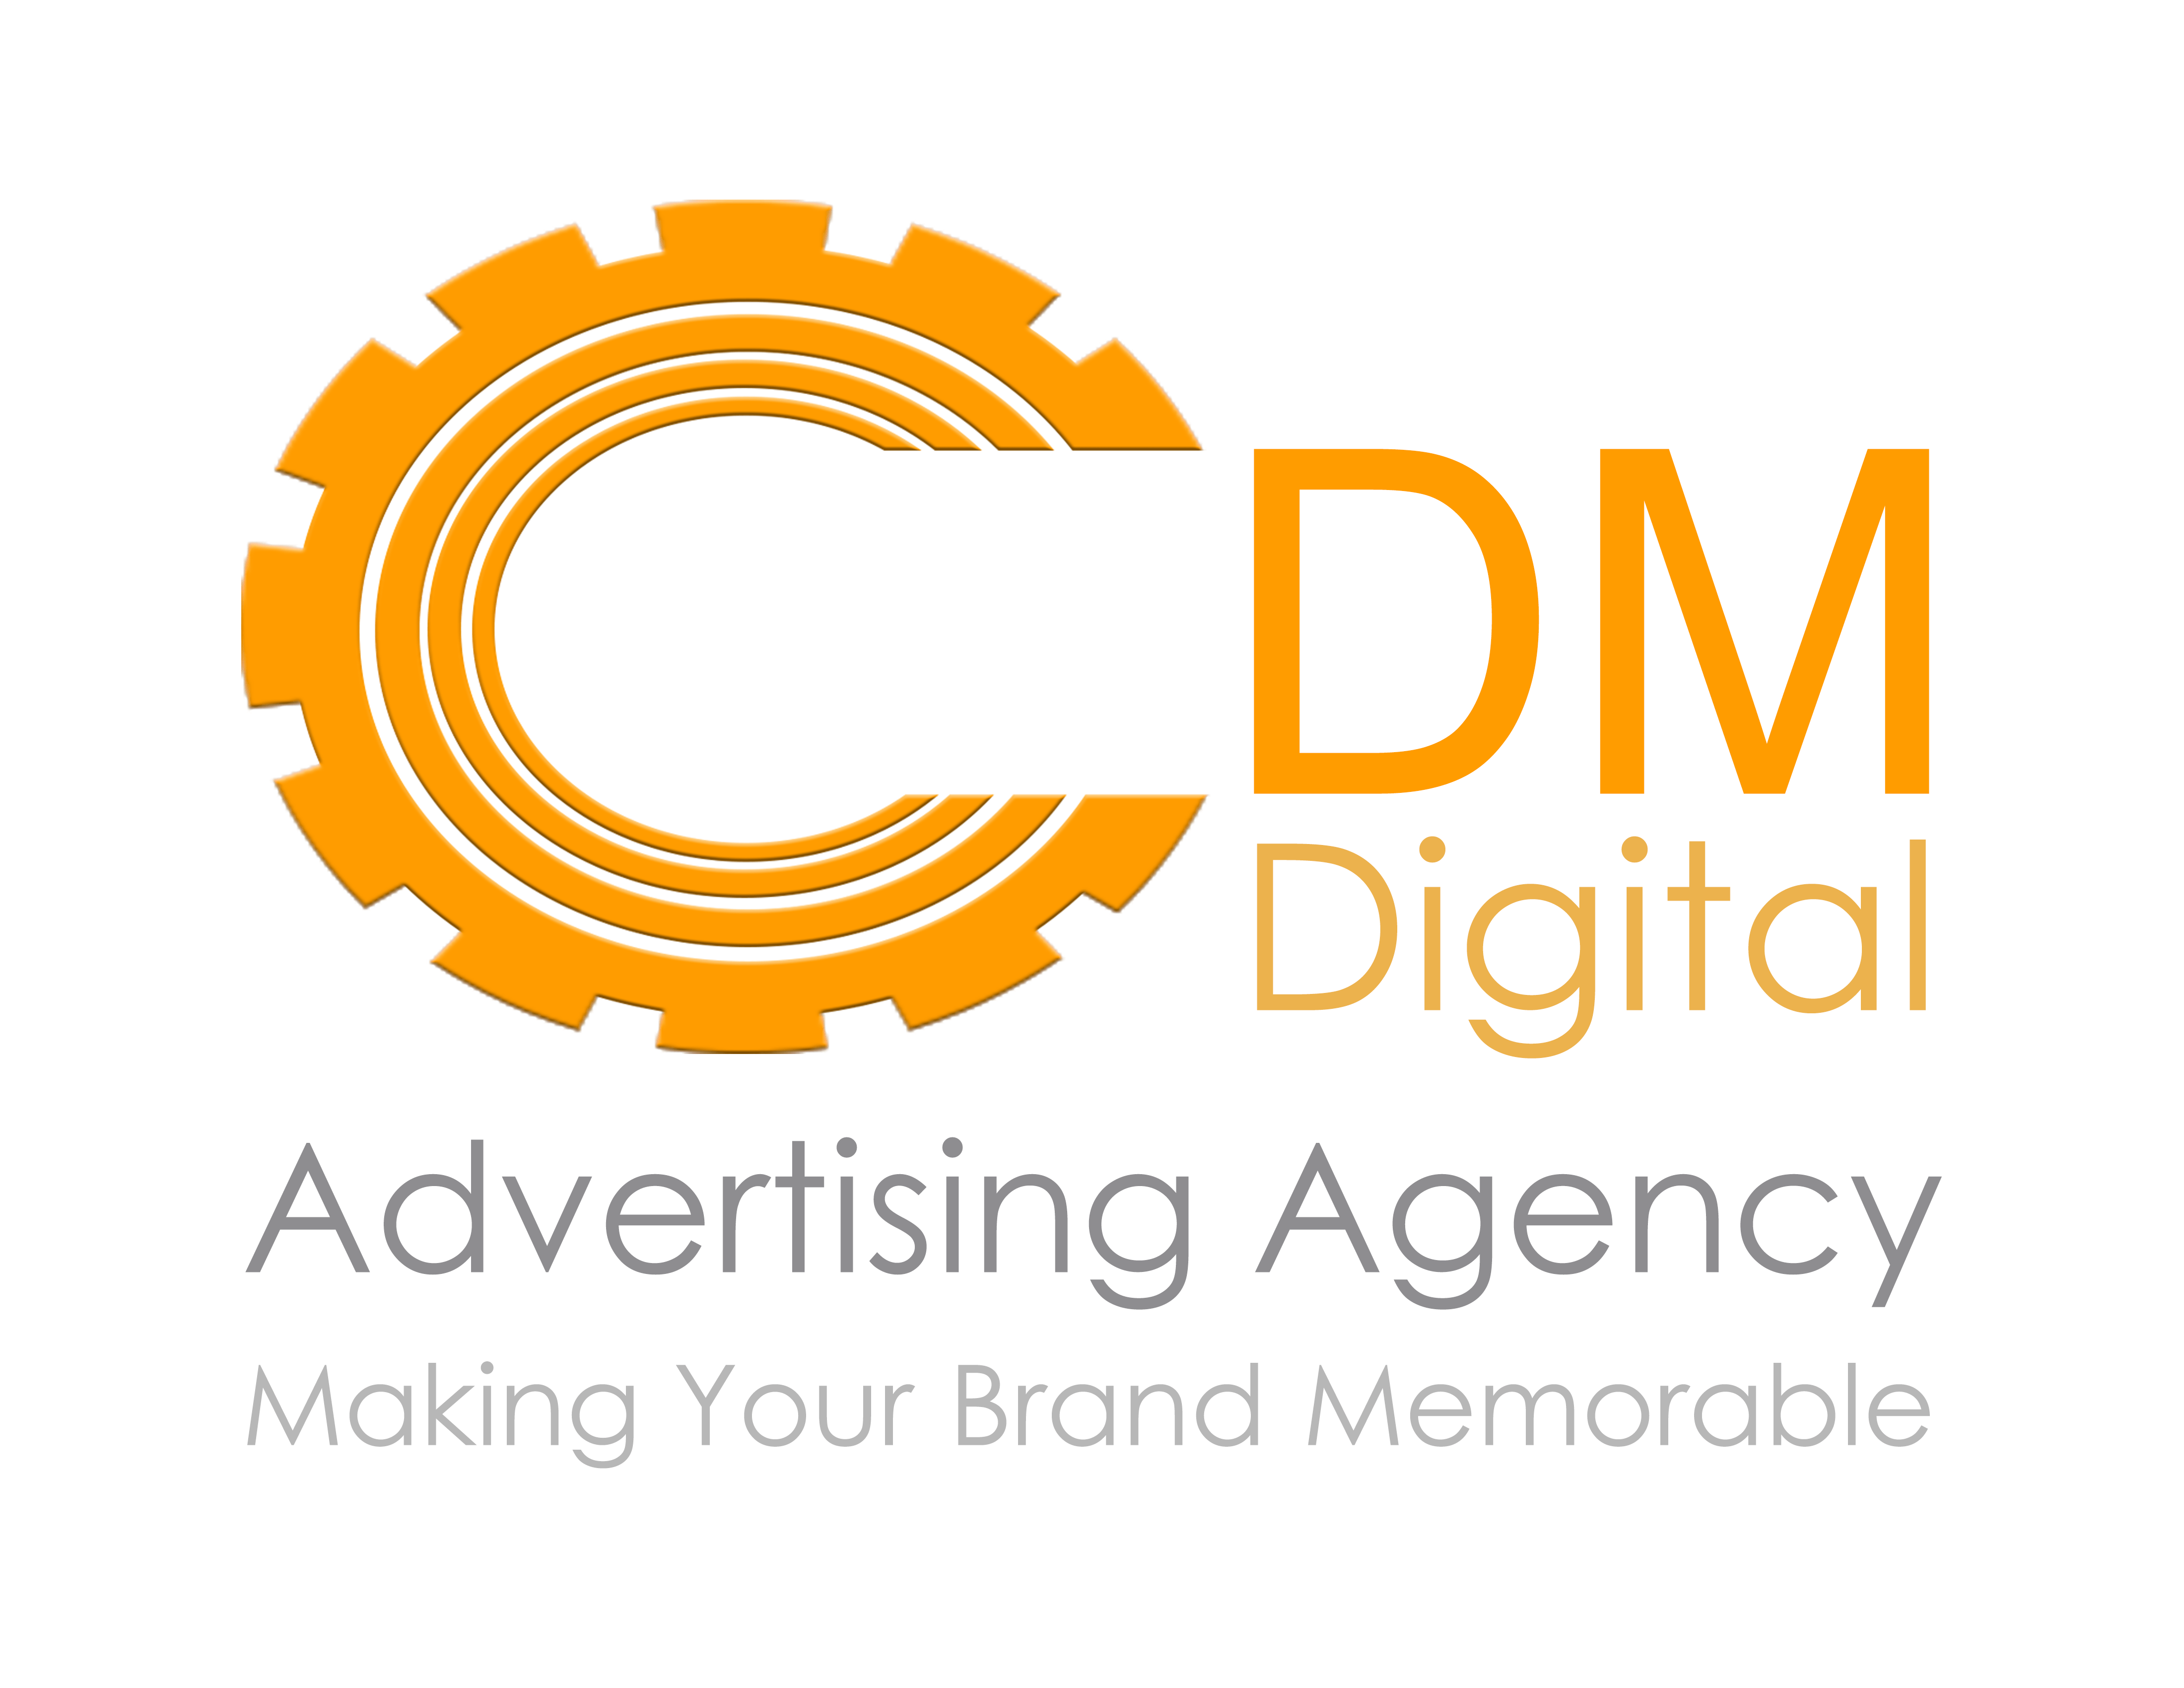 CDM Digital Advertising Agency Worldwide profile on Qualified.One